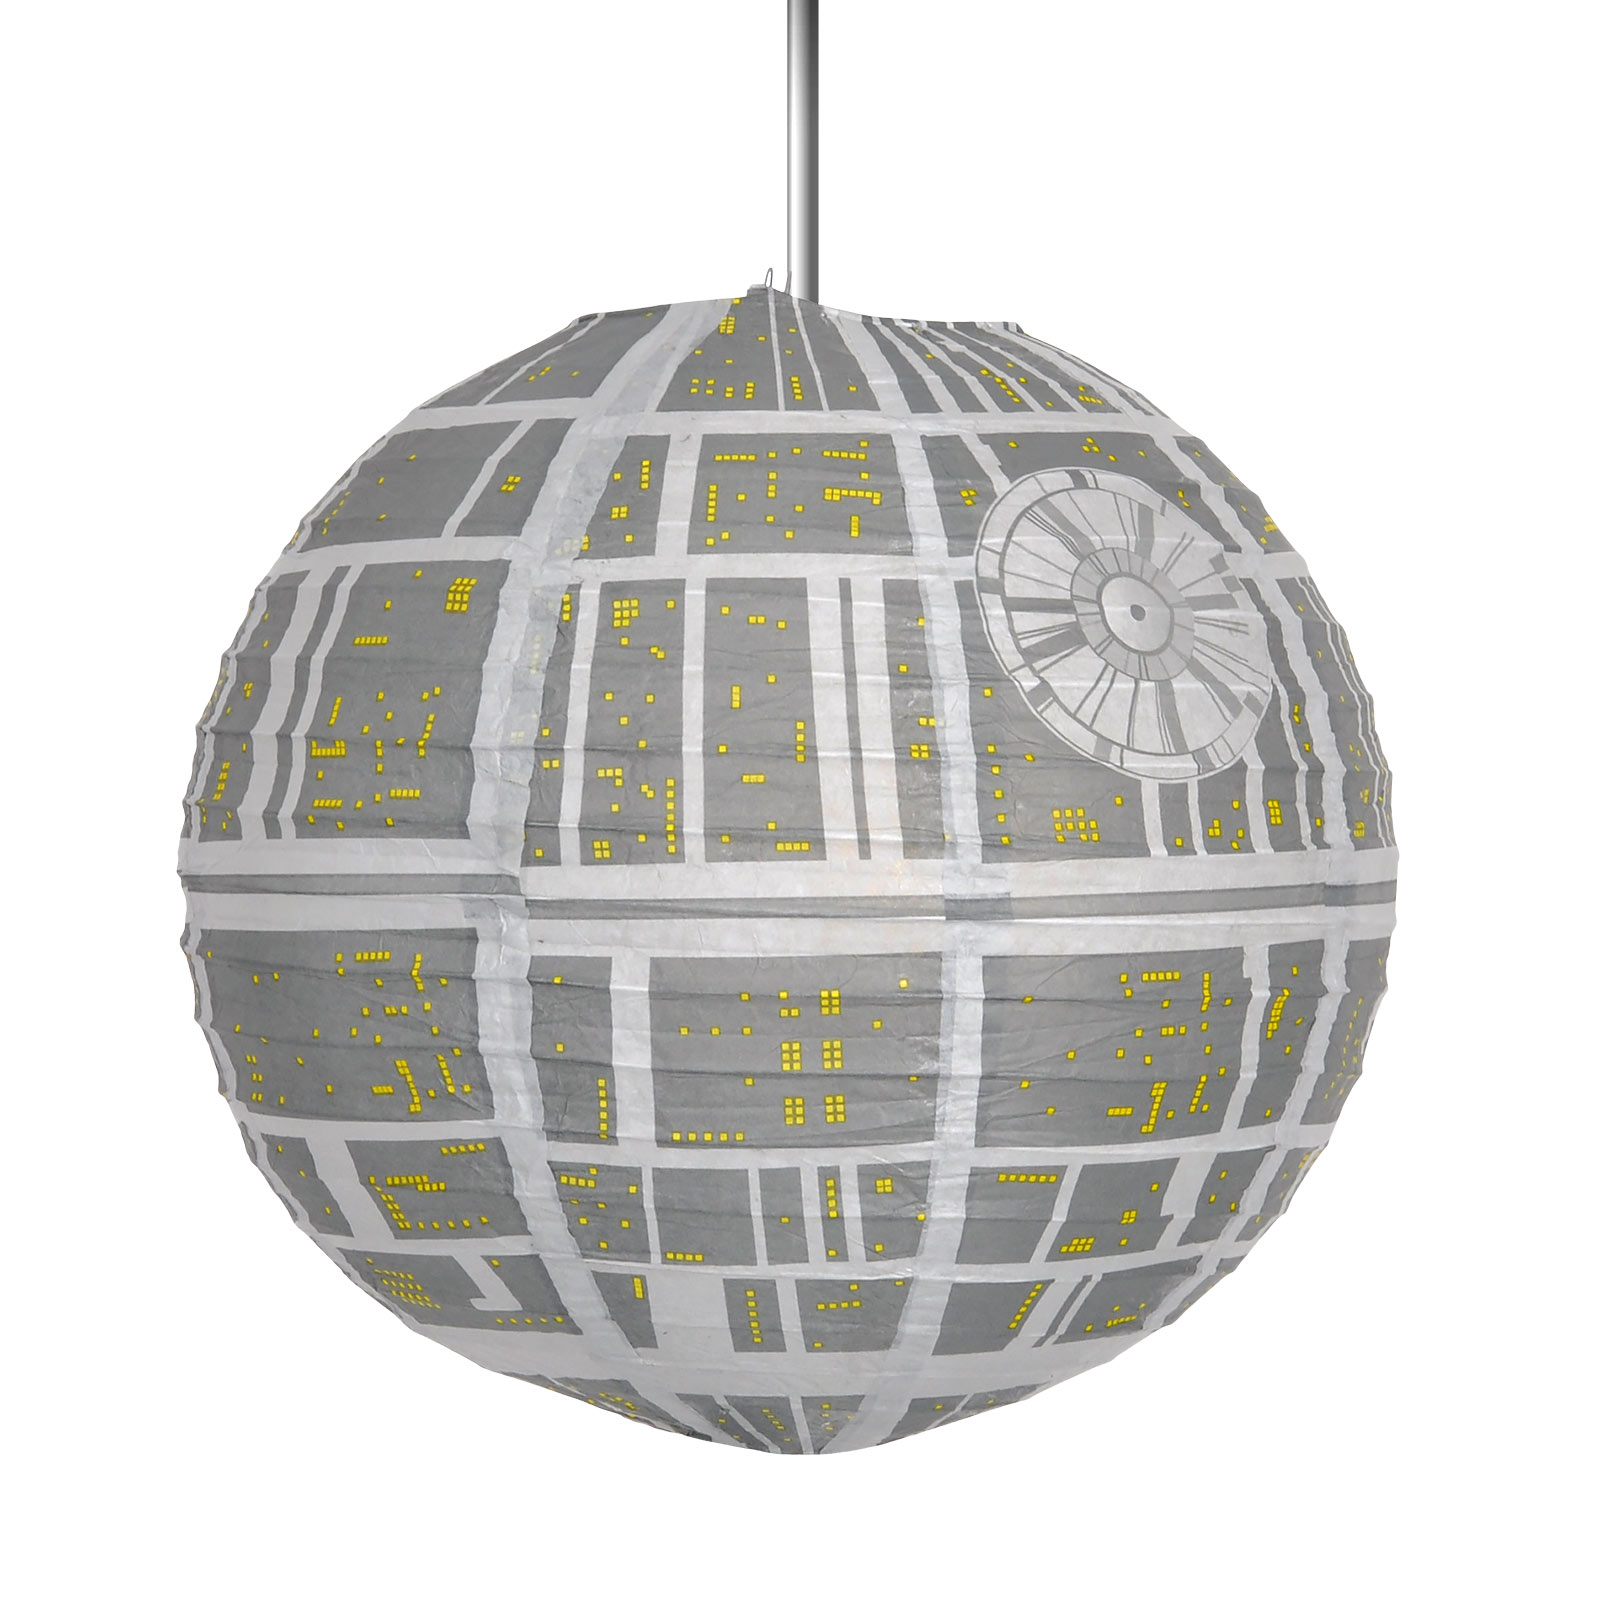 Star Wars - Death Star Lampshade 45 cm